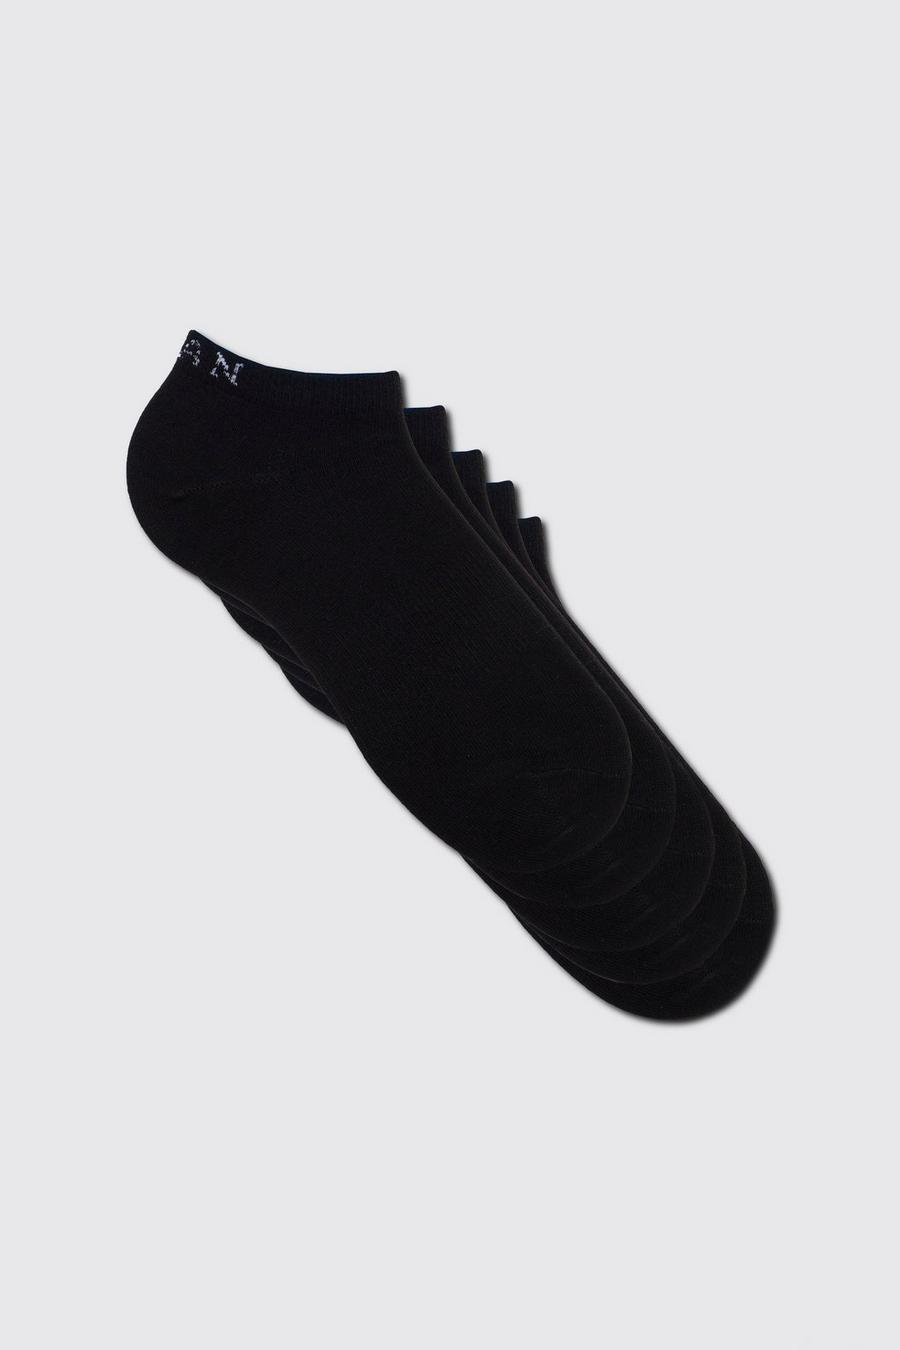 Pack de 5 pares de calcetines MAN deportivos, Black image number 1